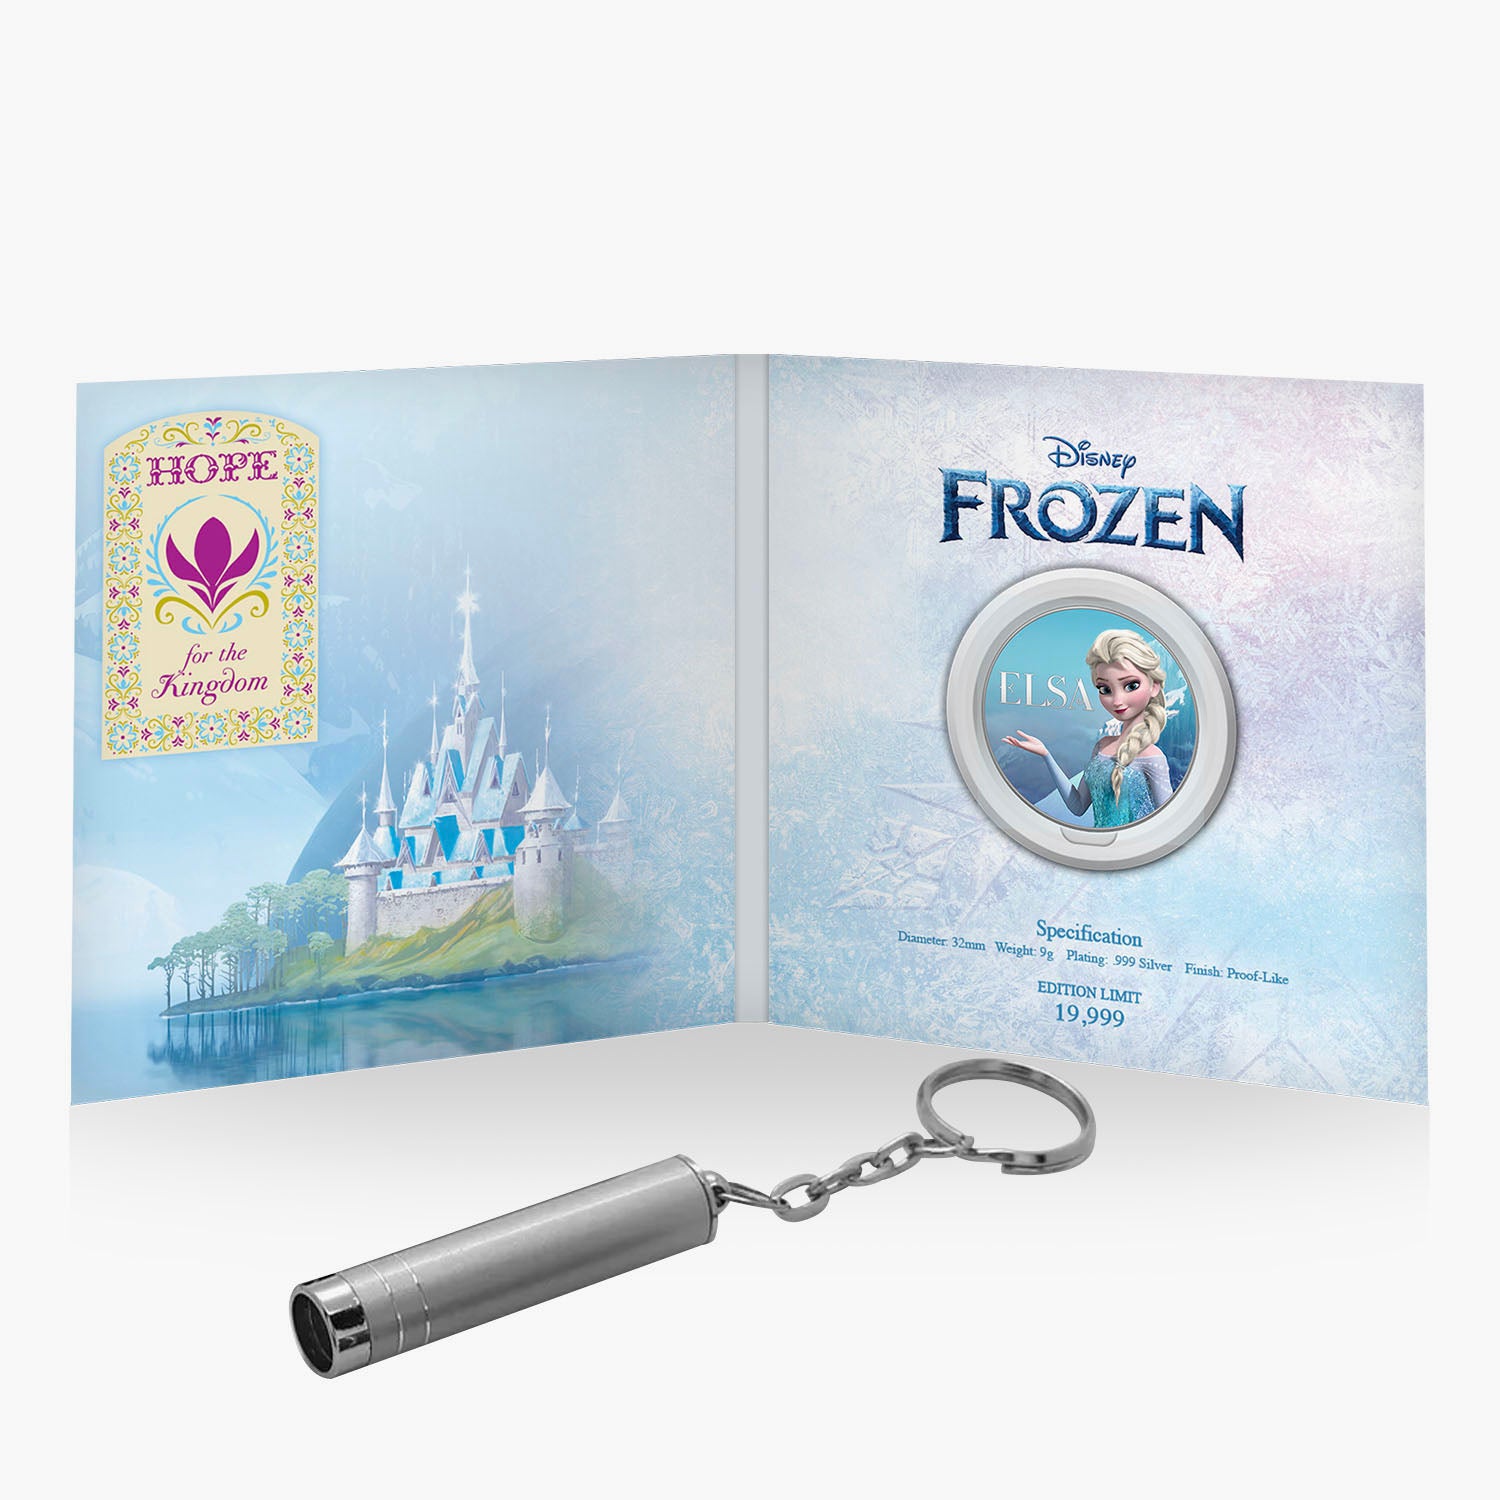 The Hidden Secret Official Disney Frozen Commemorative